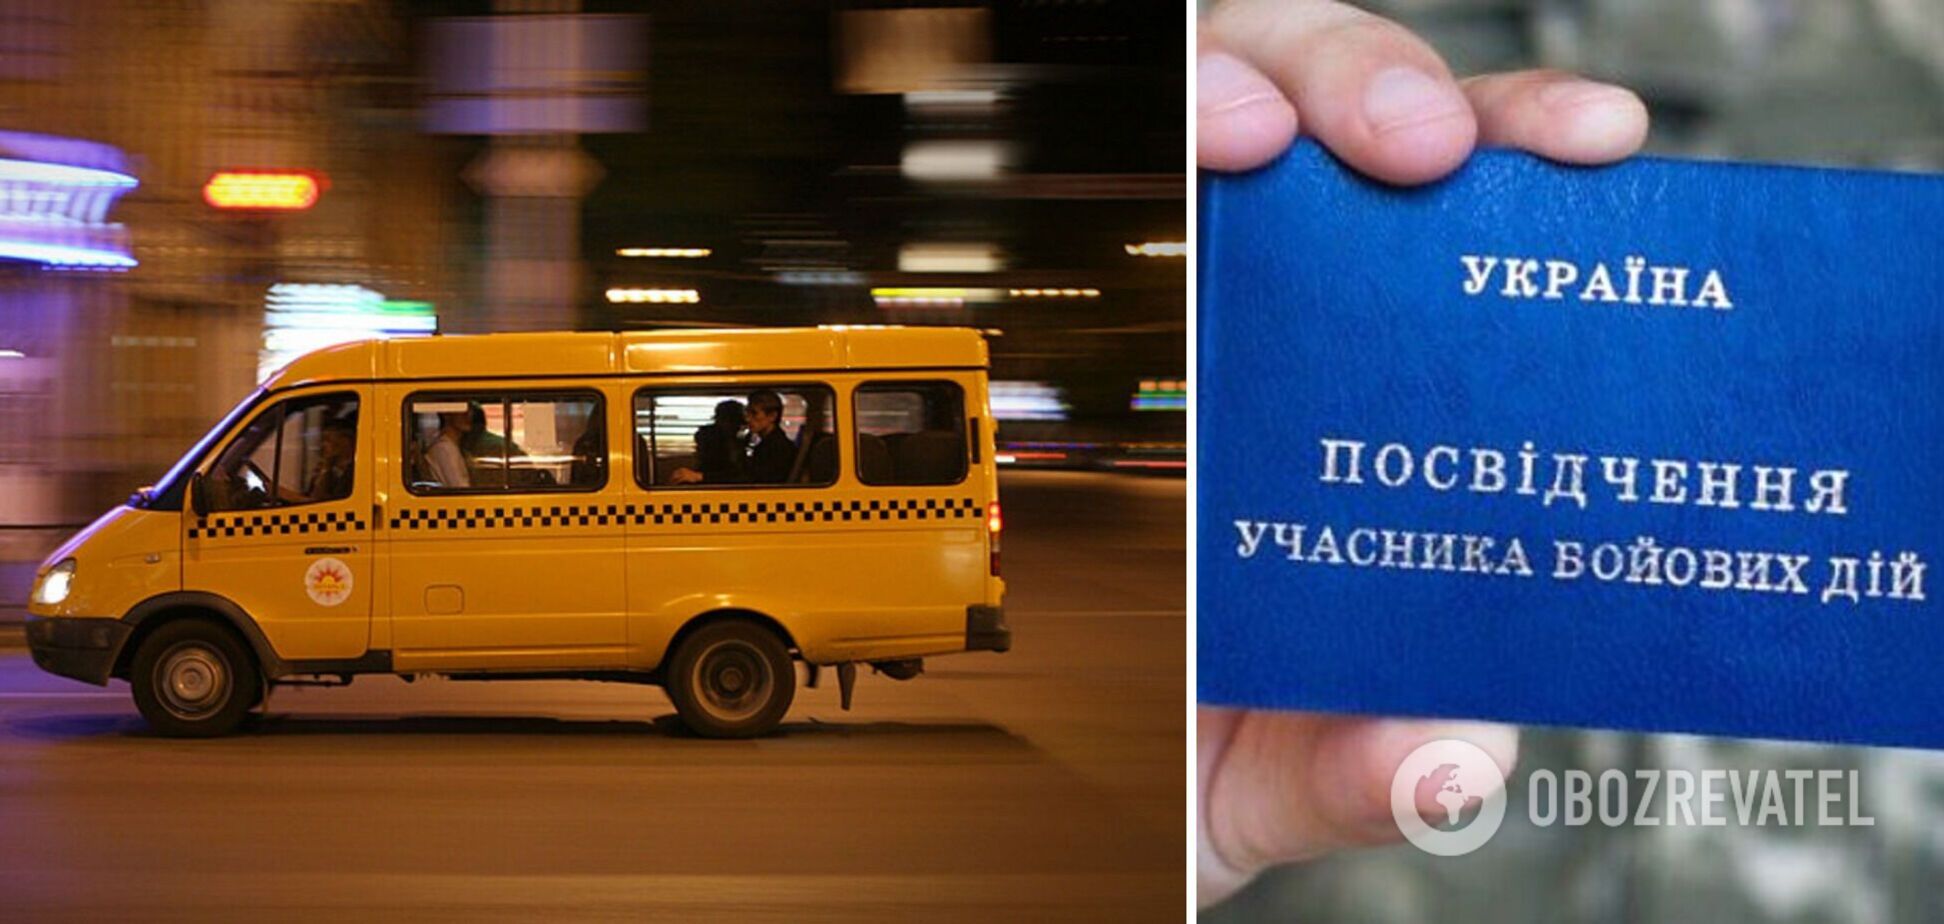 В Одессе водитель маршрутки назвал ветерана АТО 'малоимущим', разгорелся скандал. Видео